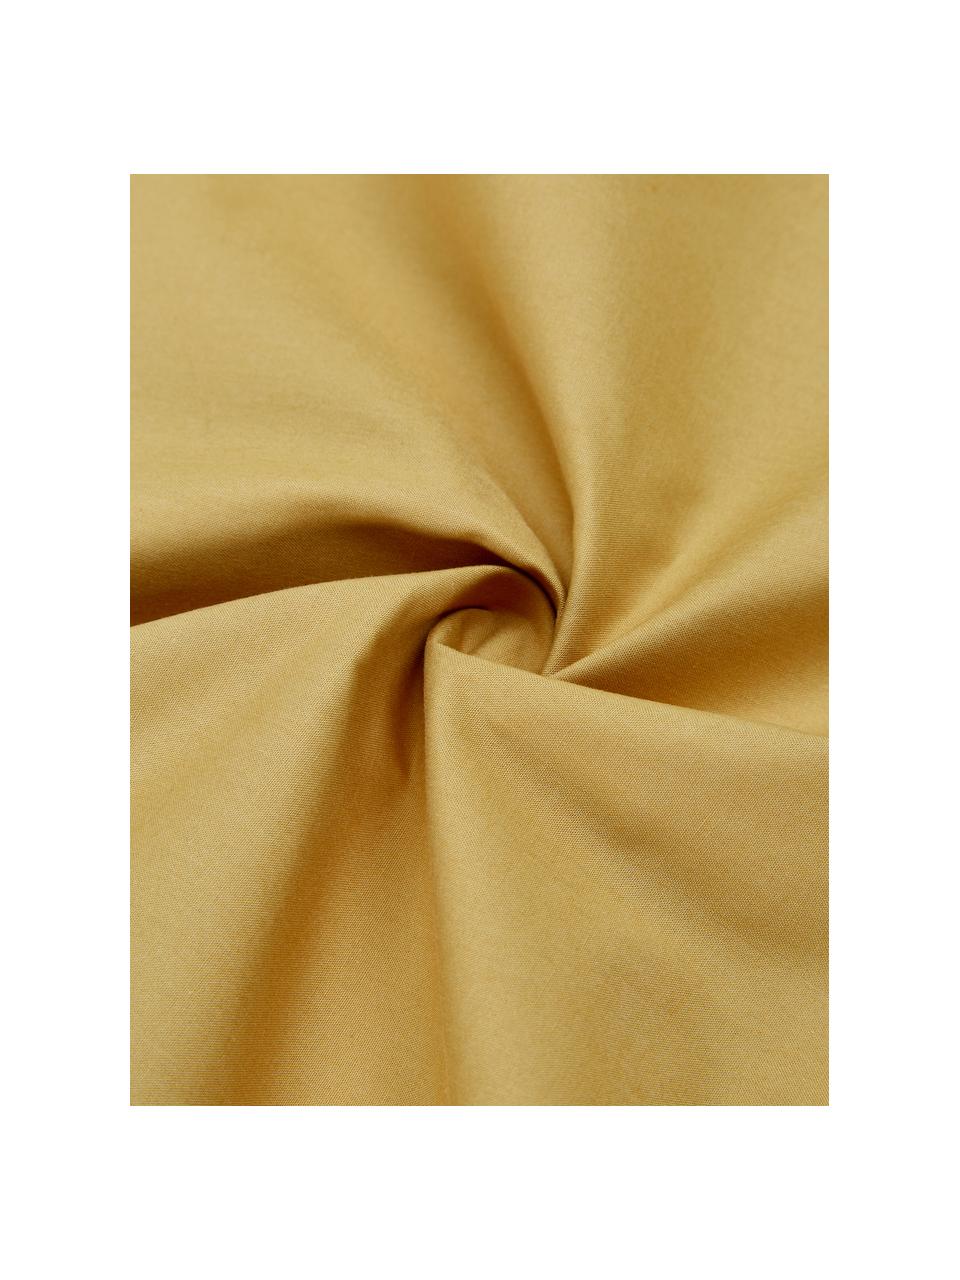 Povlečení z bavlněného perkálu Elsie, Hořčičná žlutá, 140 x 200 cm + 1 polštář 80 x 80 cm